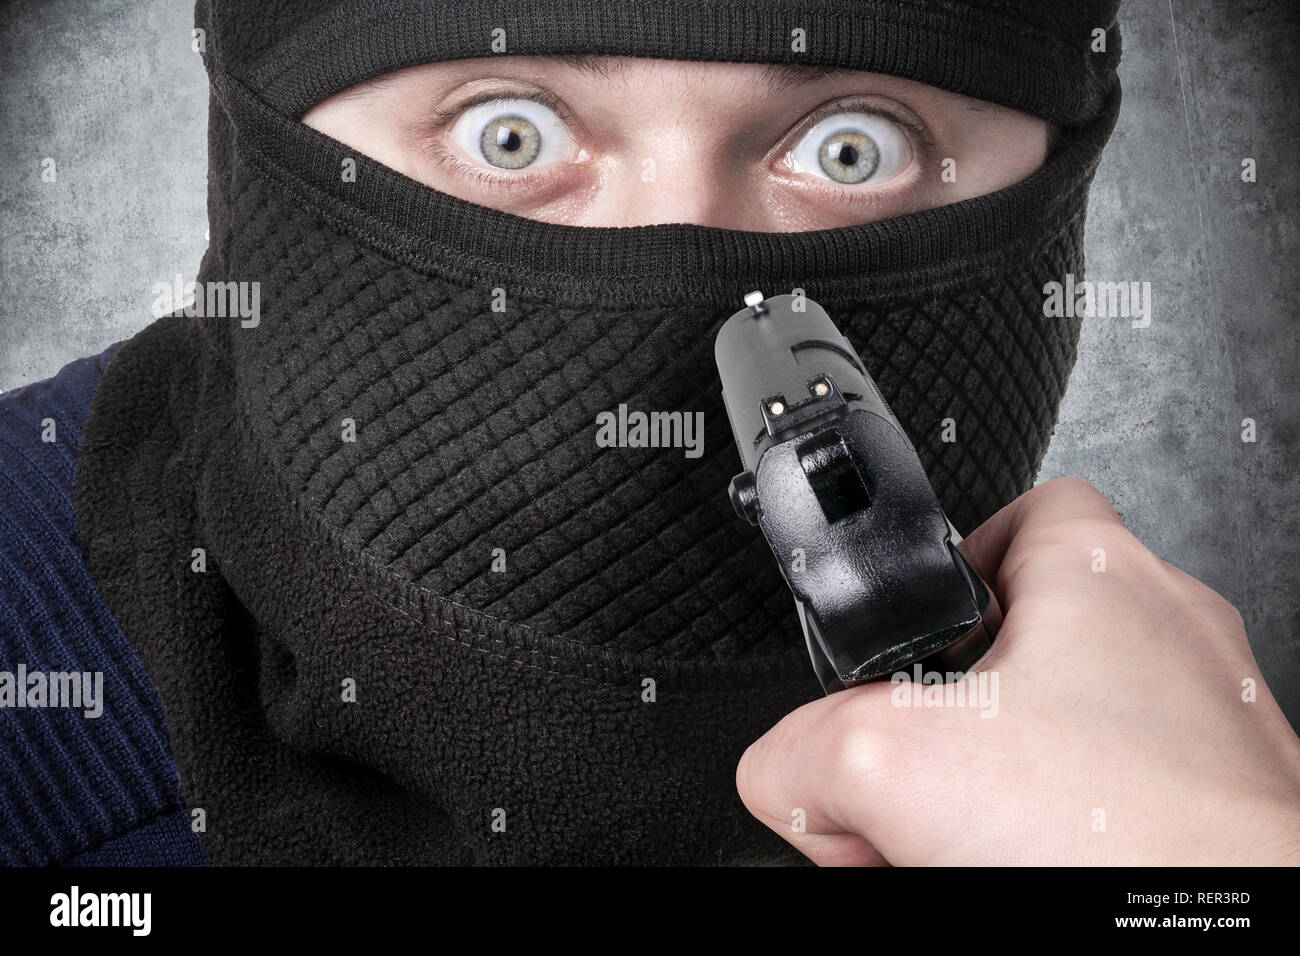 Pistola finalizzate al criminale da passamontagna Foto stock - Alamy